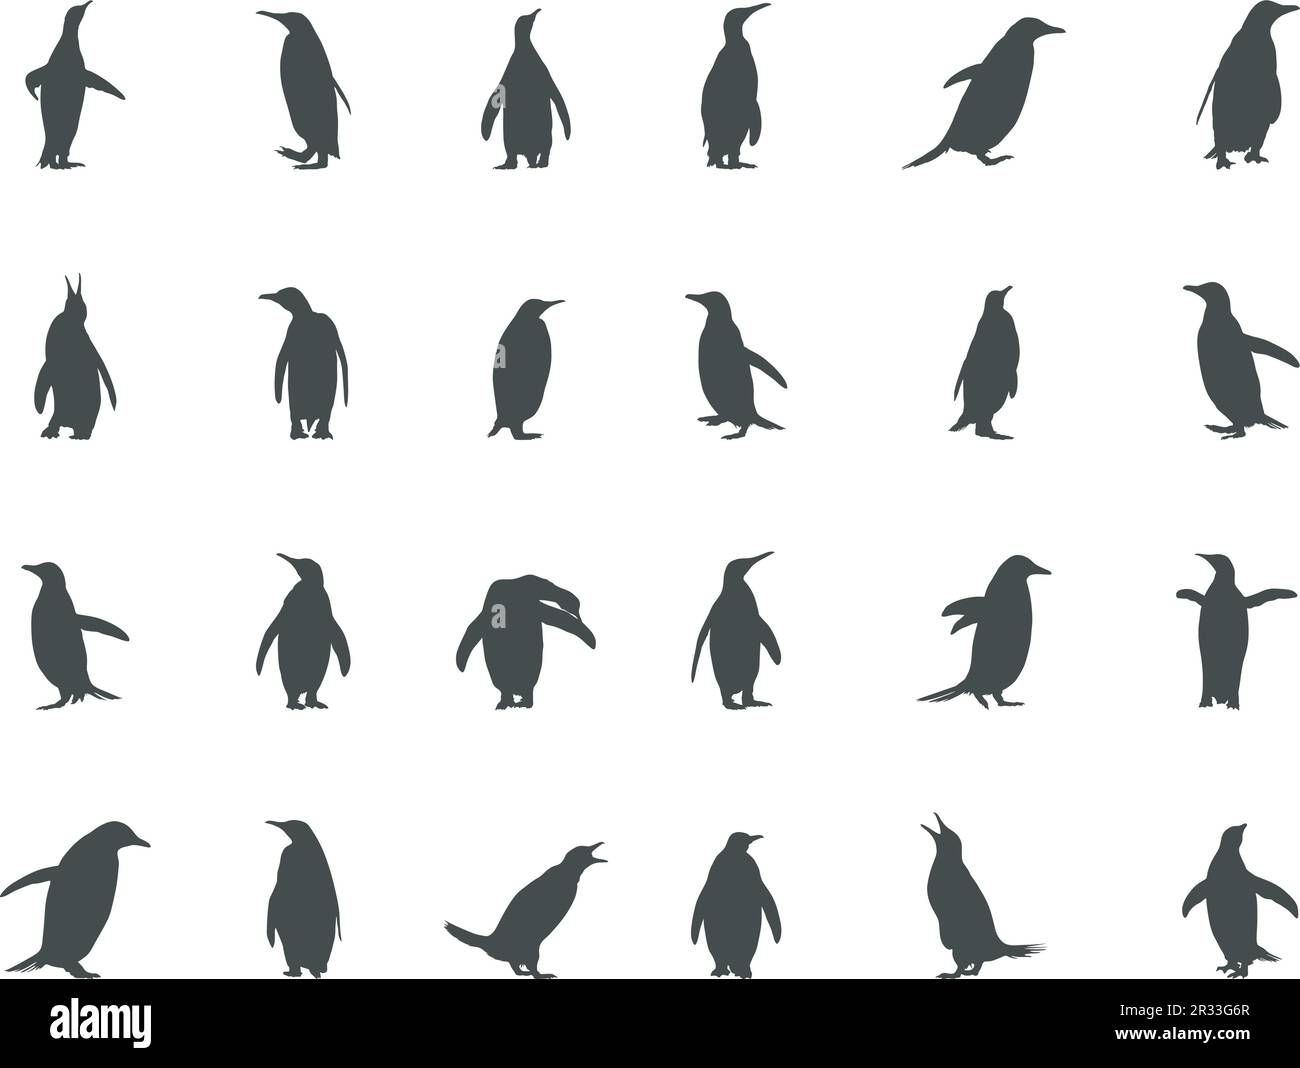 Silhouette de pingouins, clipart de pingouins, illustration de pingouins. Illustration de Vecteur